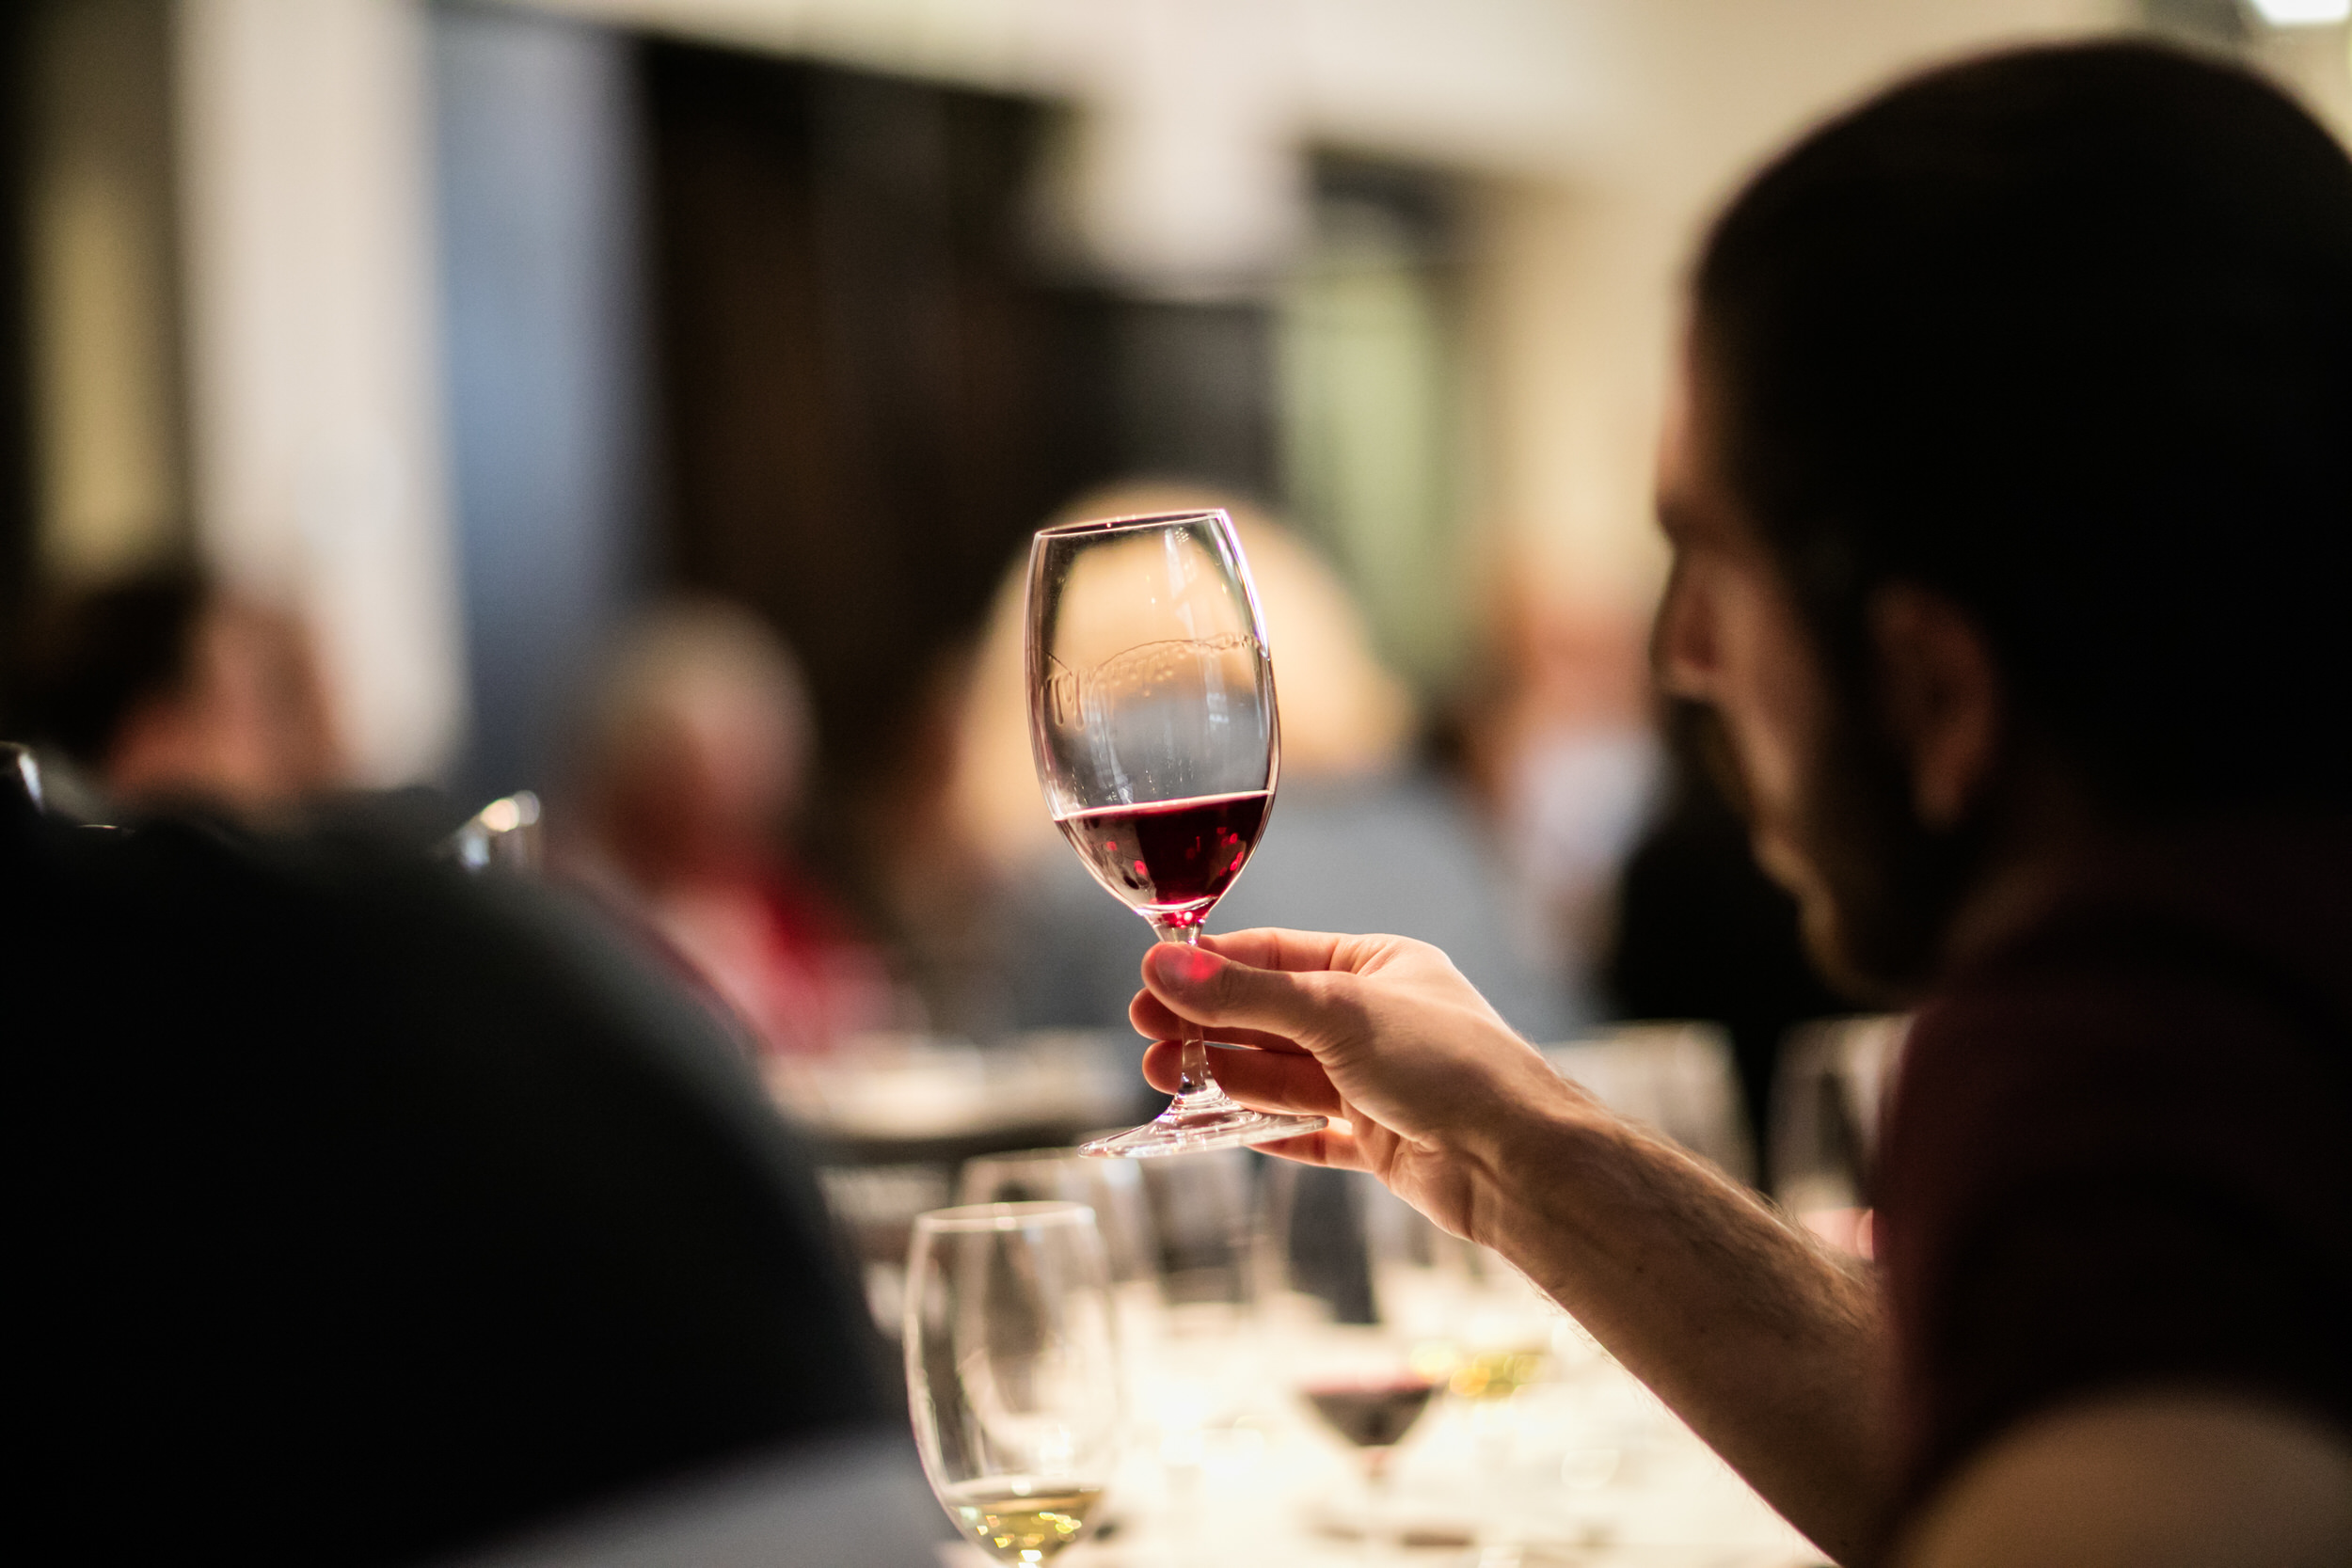 Bespoke wine and food tasting event with Sydney Wine Tasting